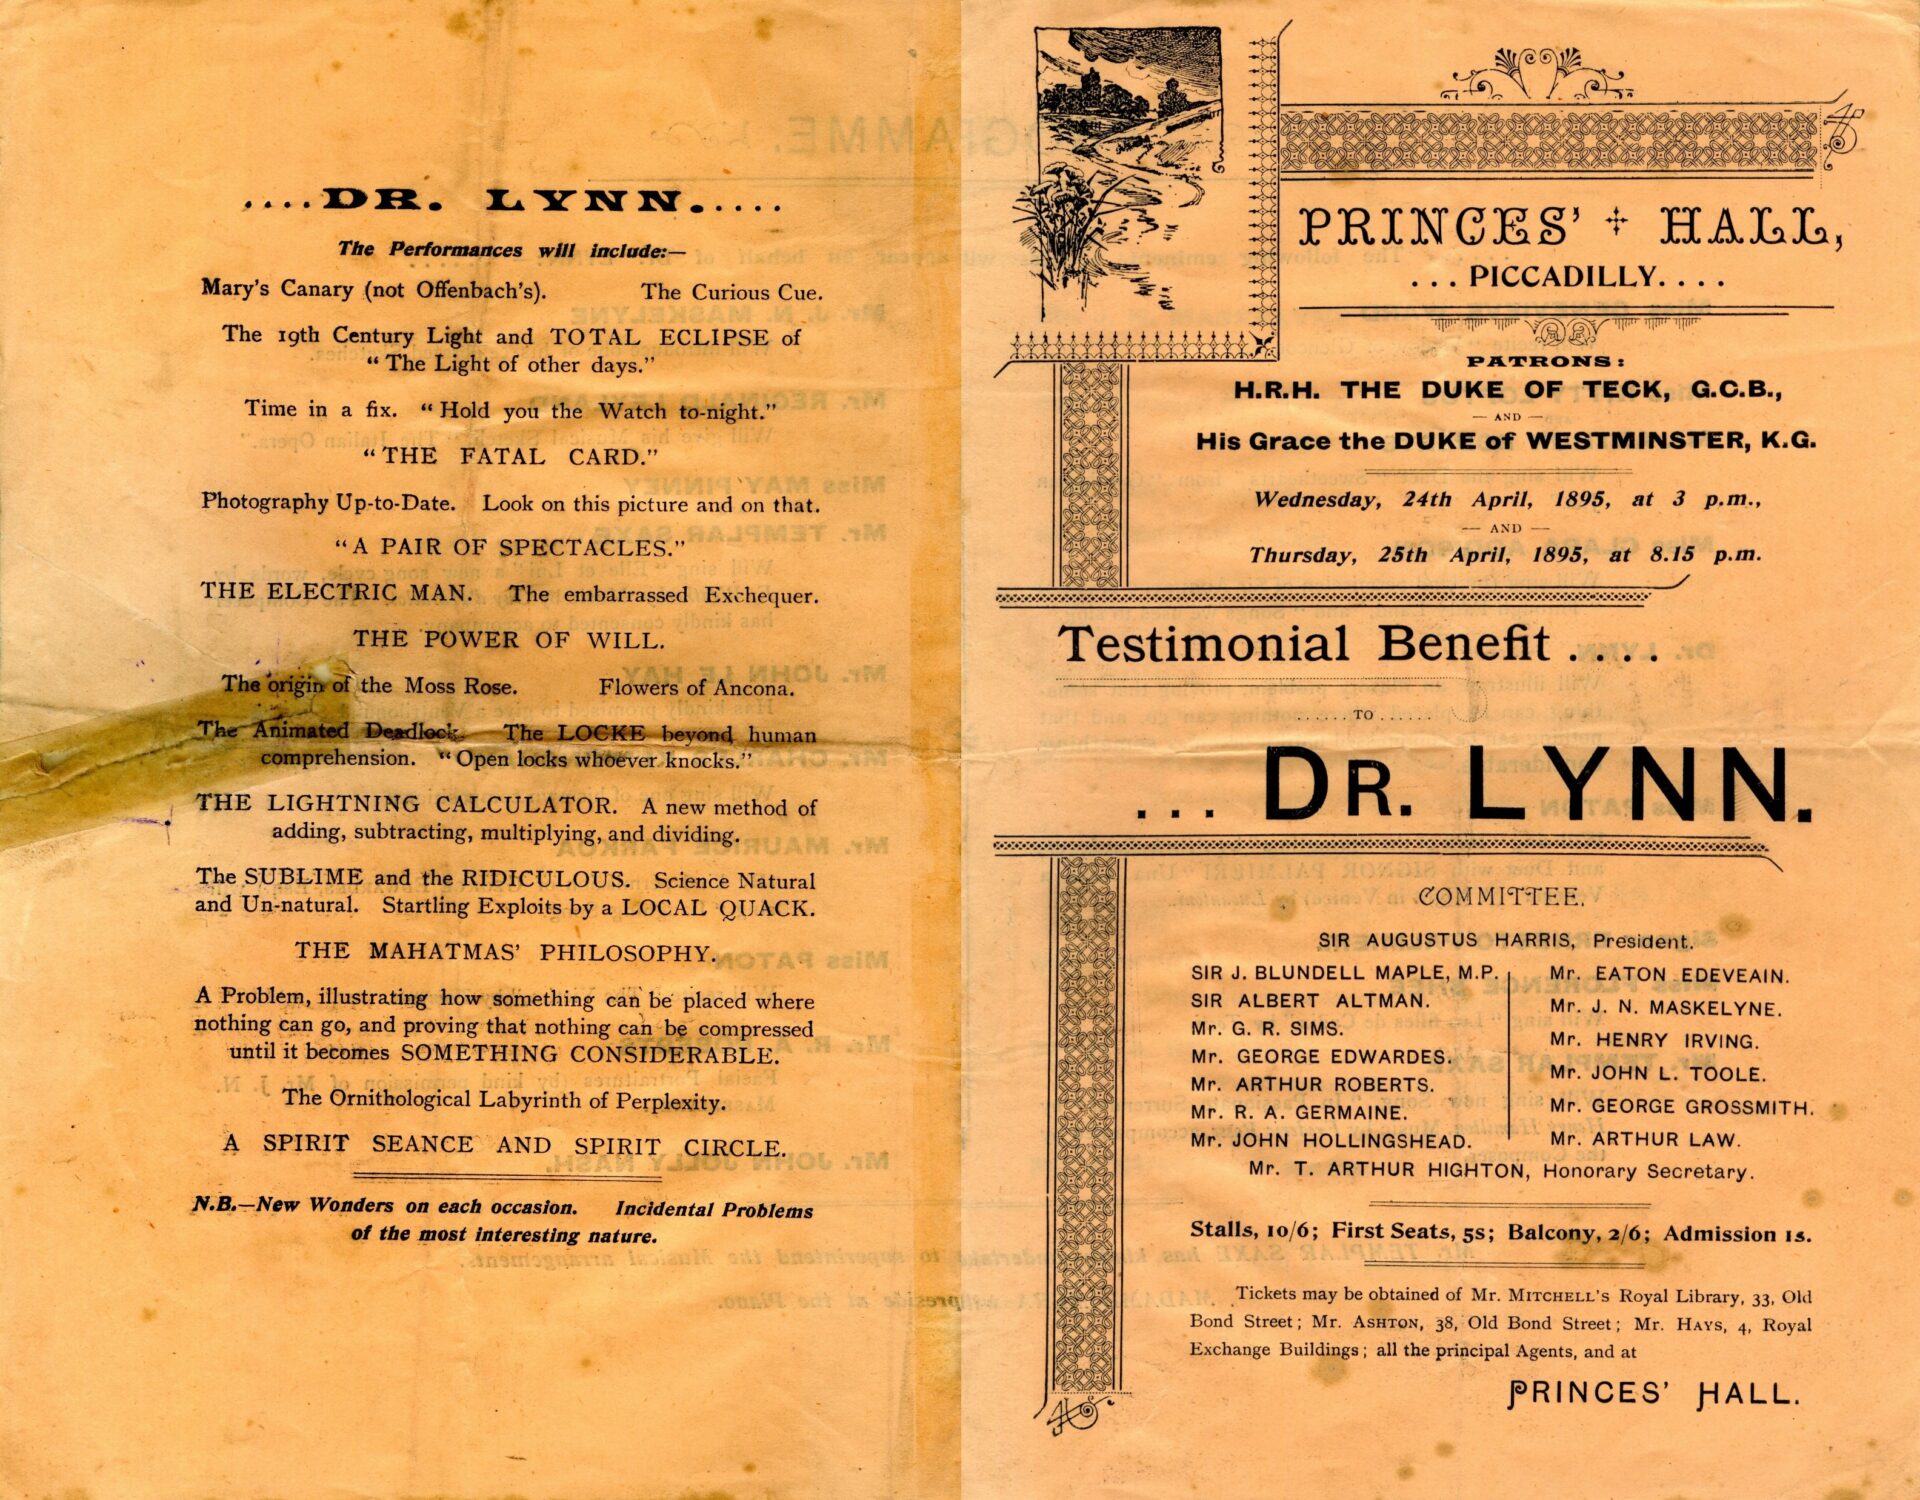 Testimonial Benefit to Dr Lynn at Prince’s Hall, London. 1895